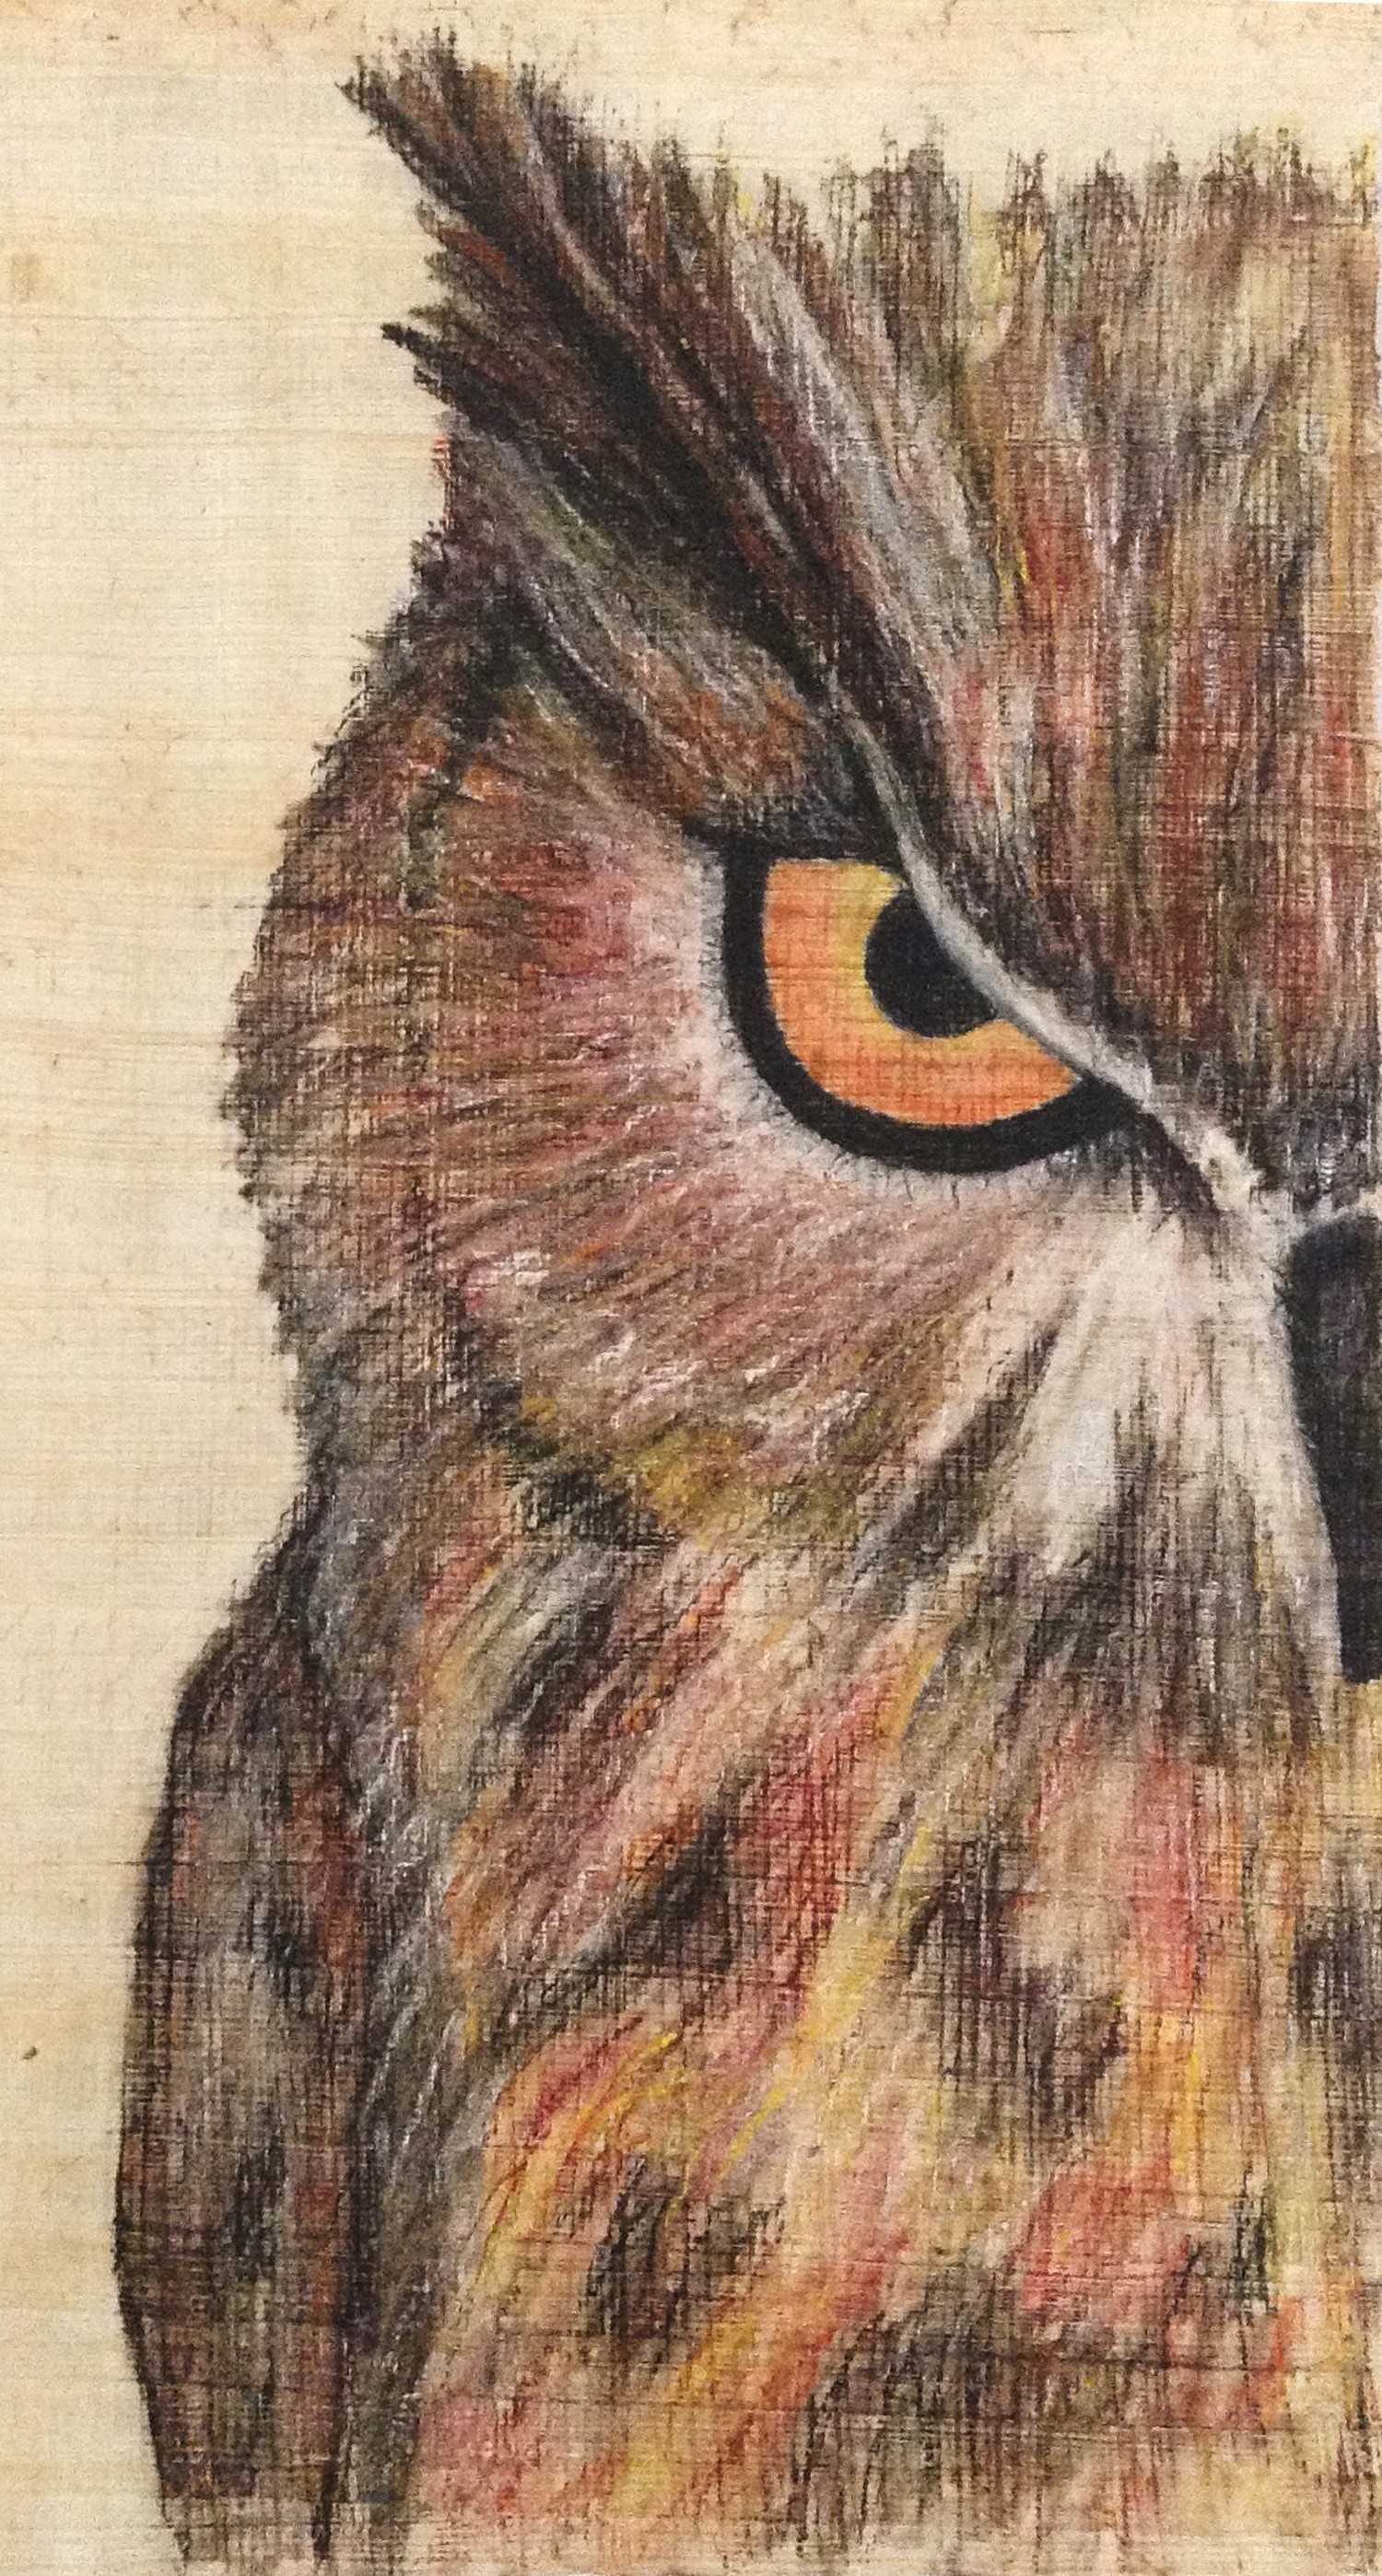 Portrait-of-an-Owl.jpg